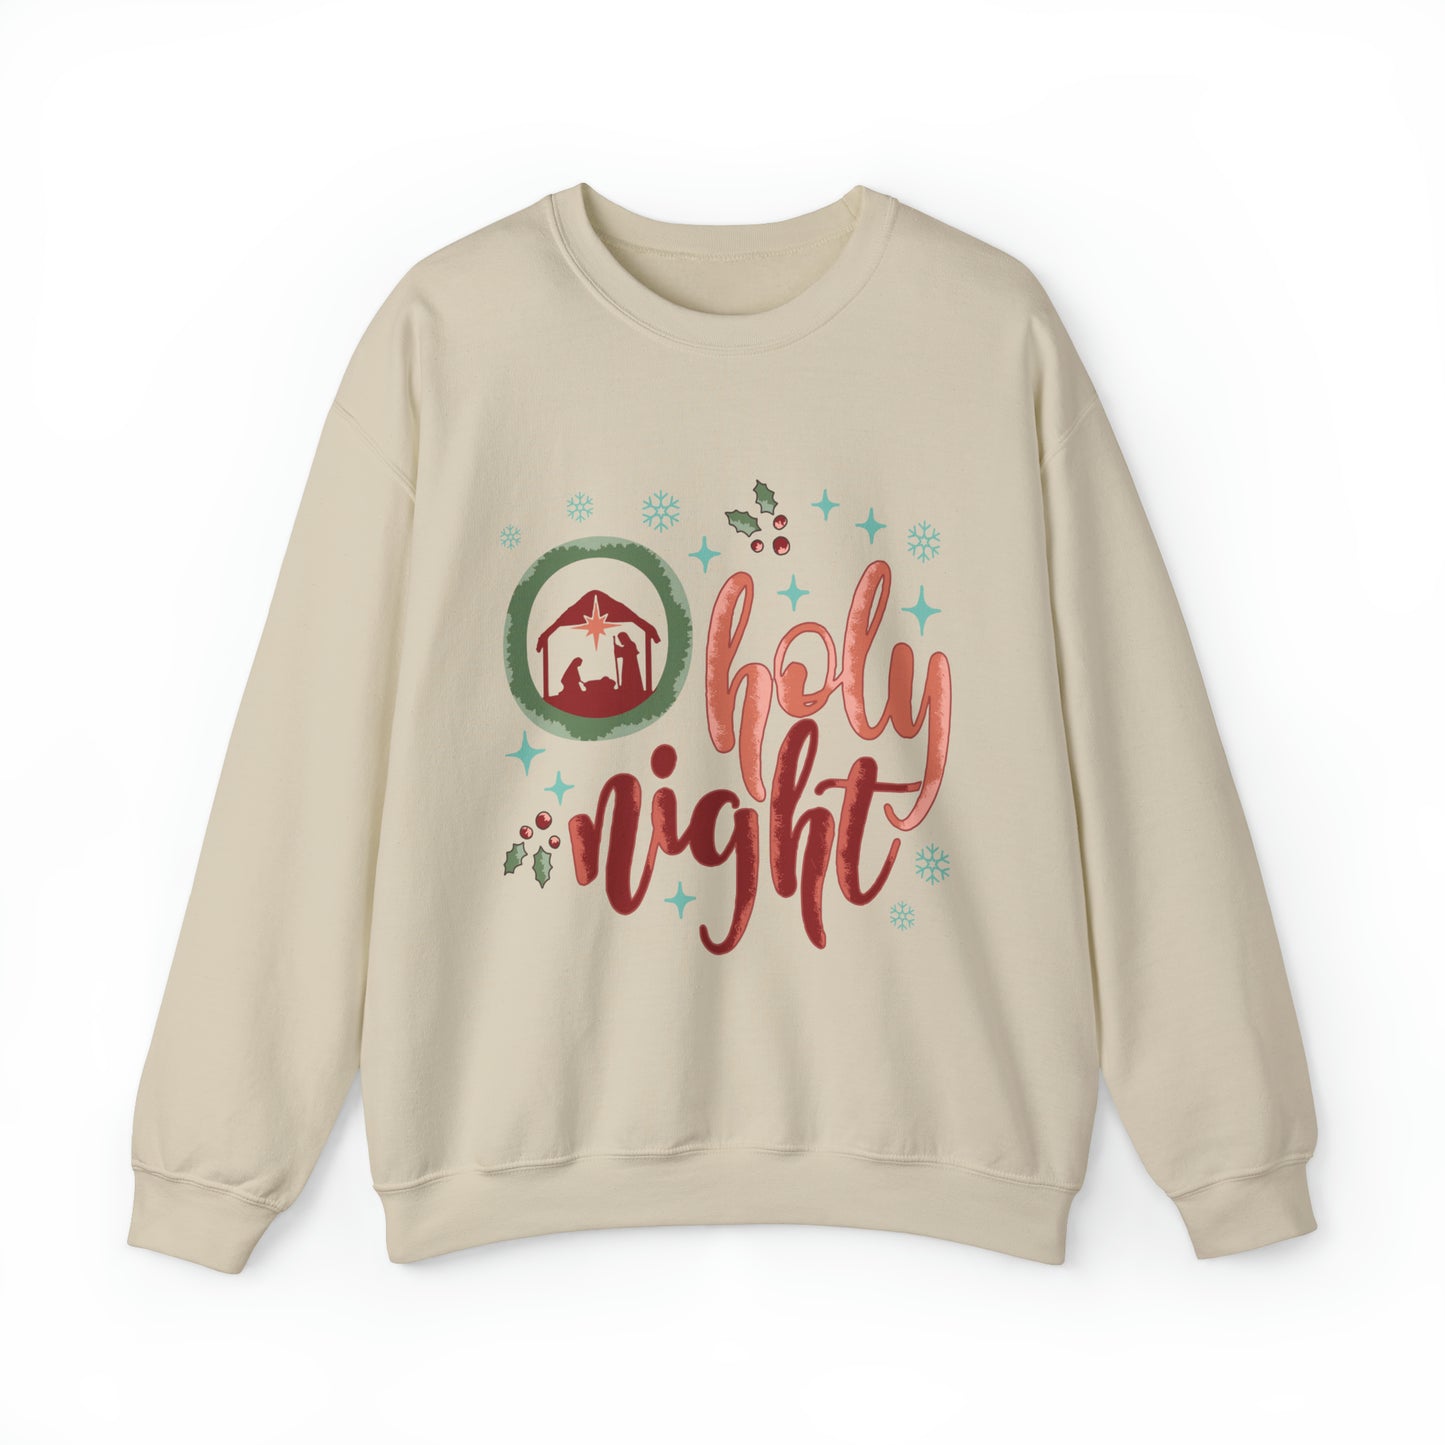 O Holy Night Women's Christmas Sweatshirt